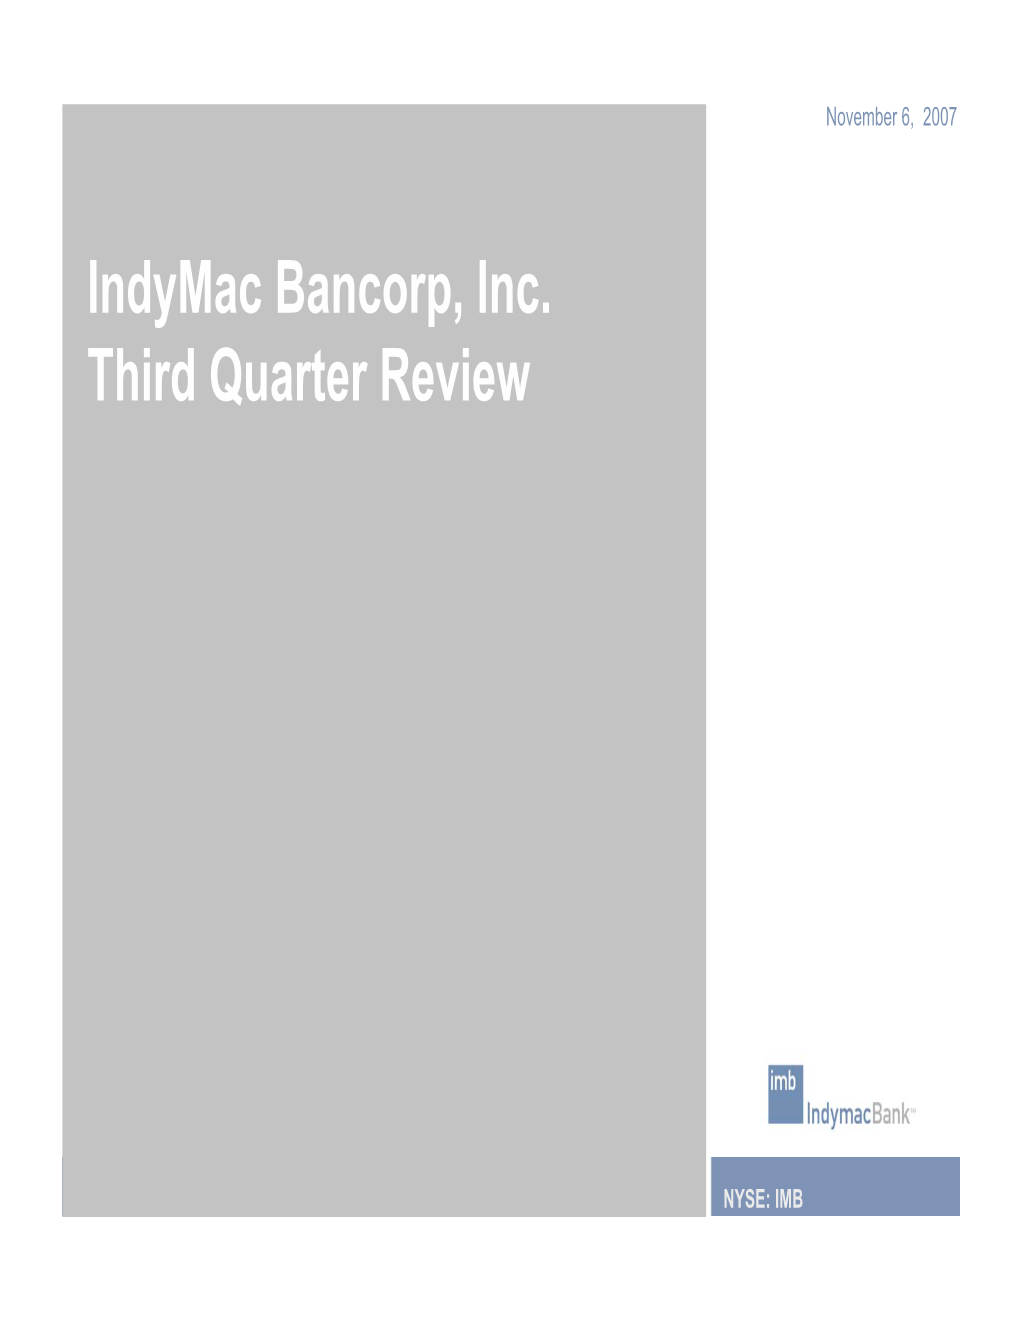 Indymac Bancorp, Inc. Third Quarter Review